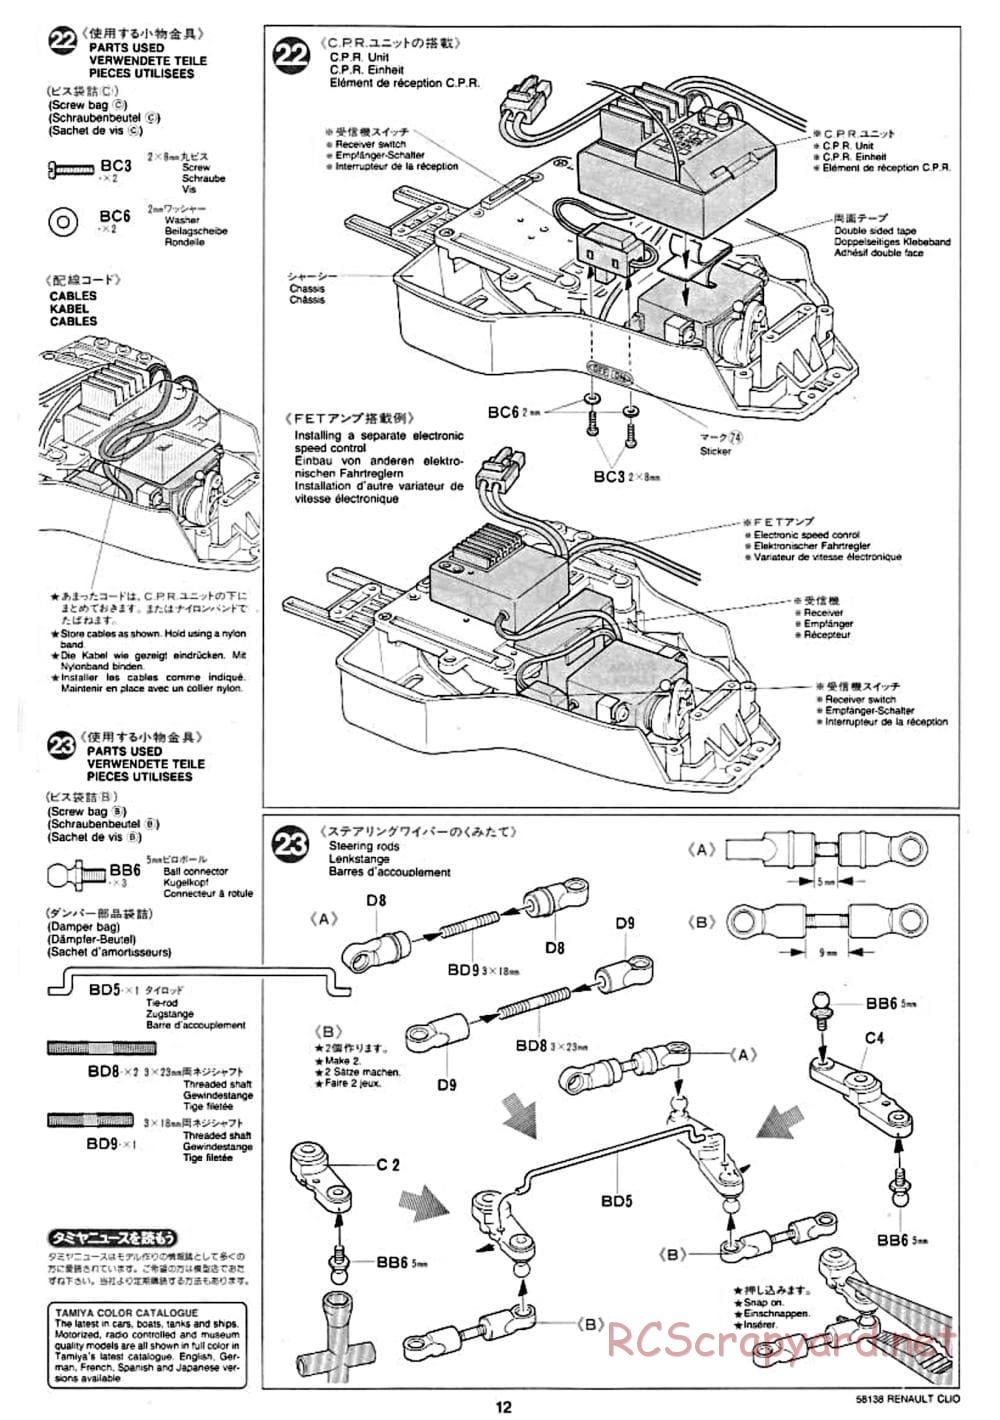 Tamiya - Renault Clio Williams Chassis - Manual - Page 12